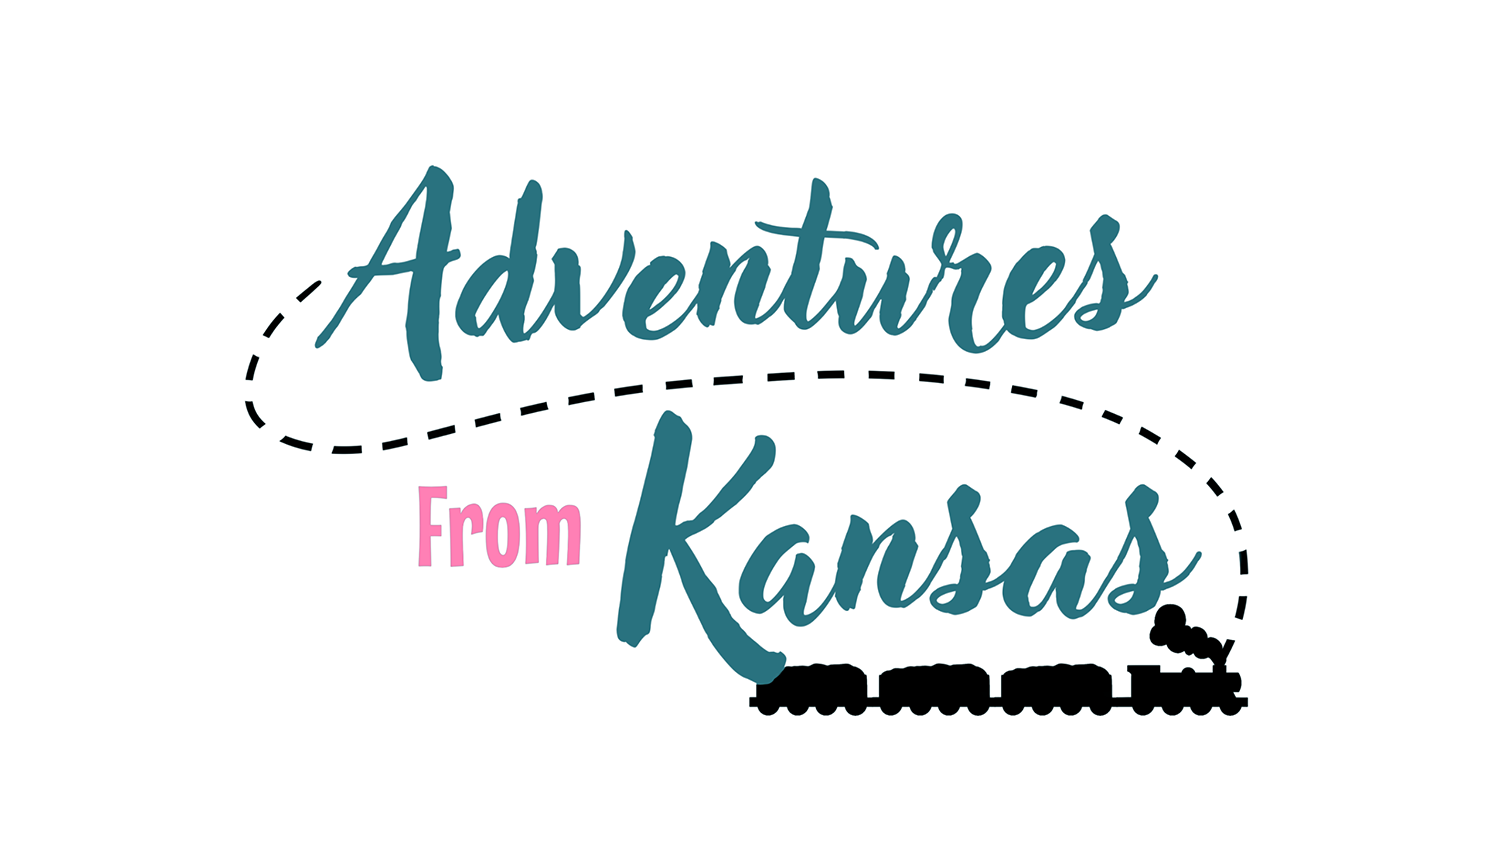 Adventures From Kansas